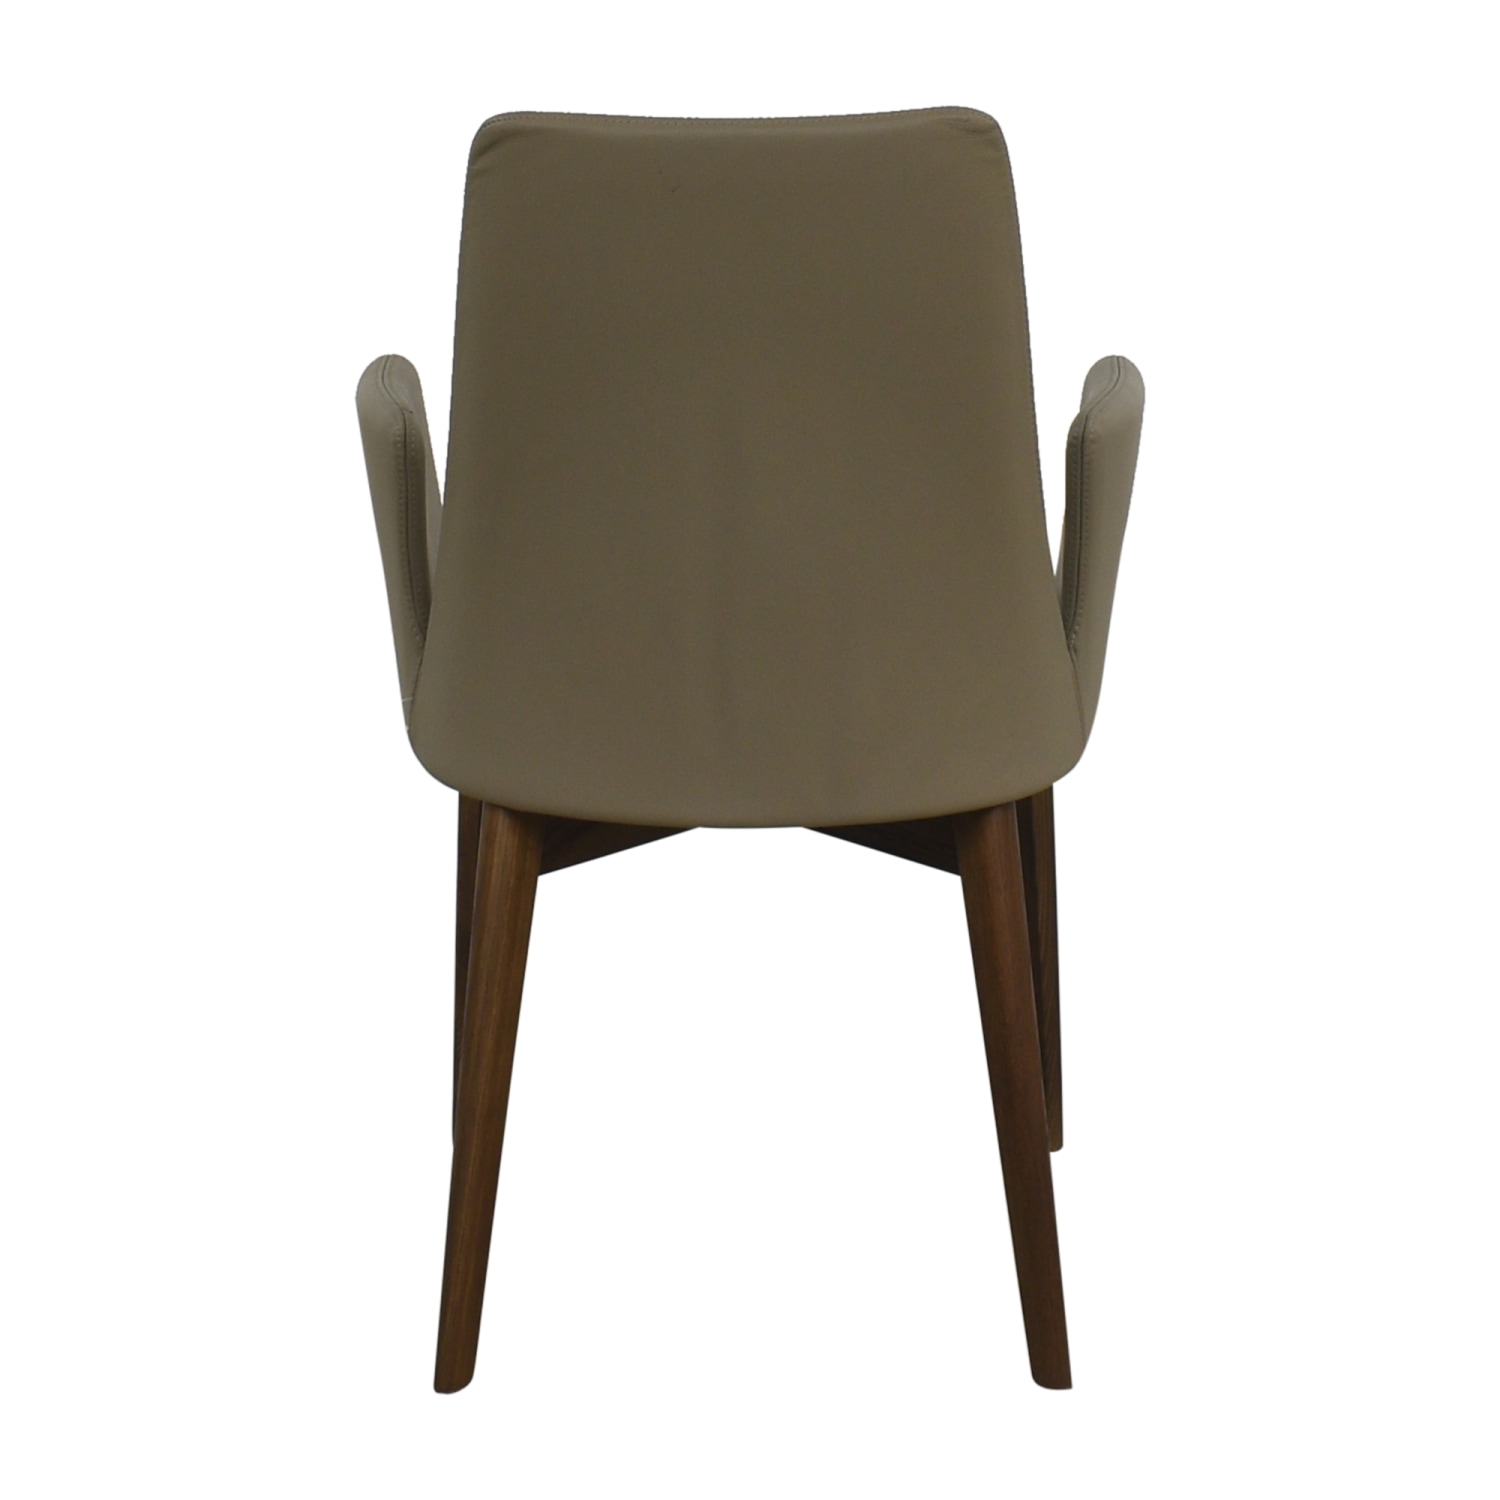 Calligaris Calligaris Etoile Arm Chair beige/tan